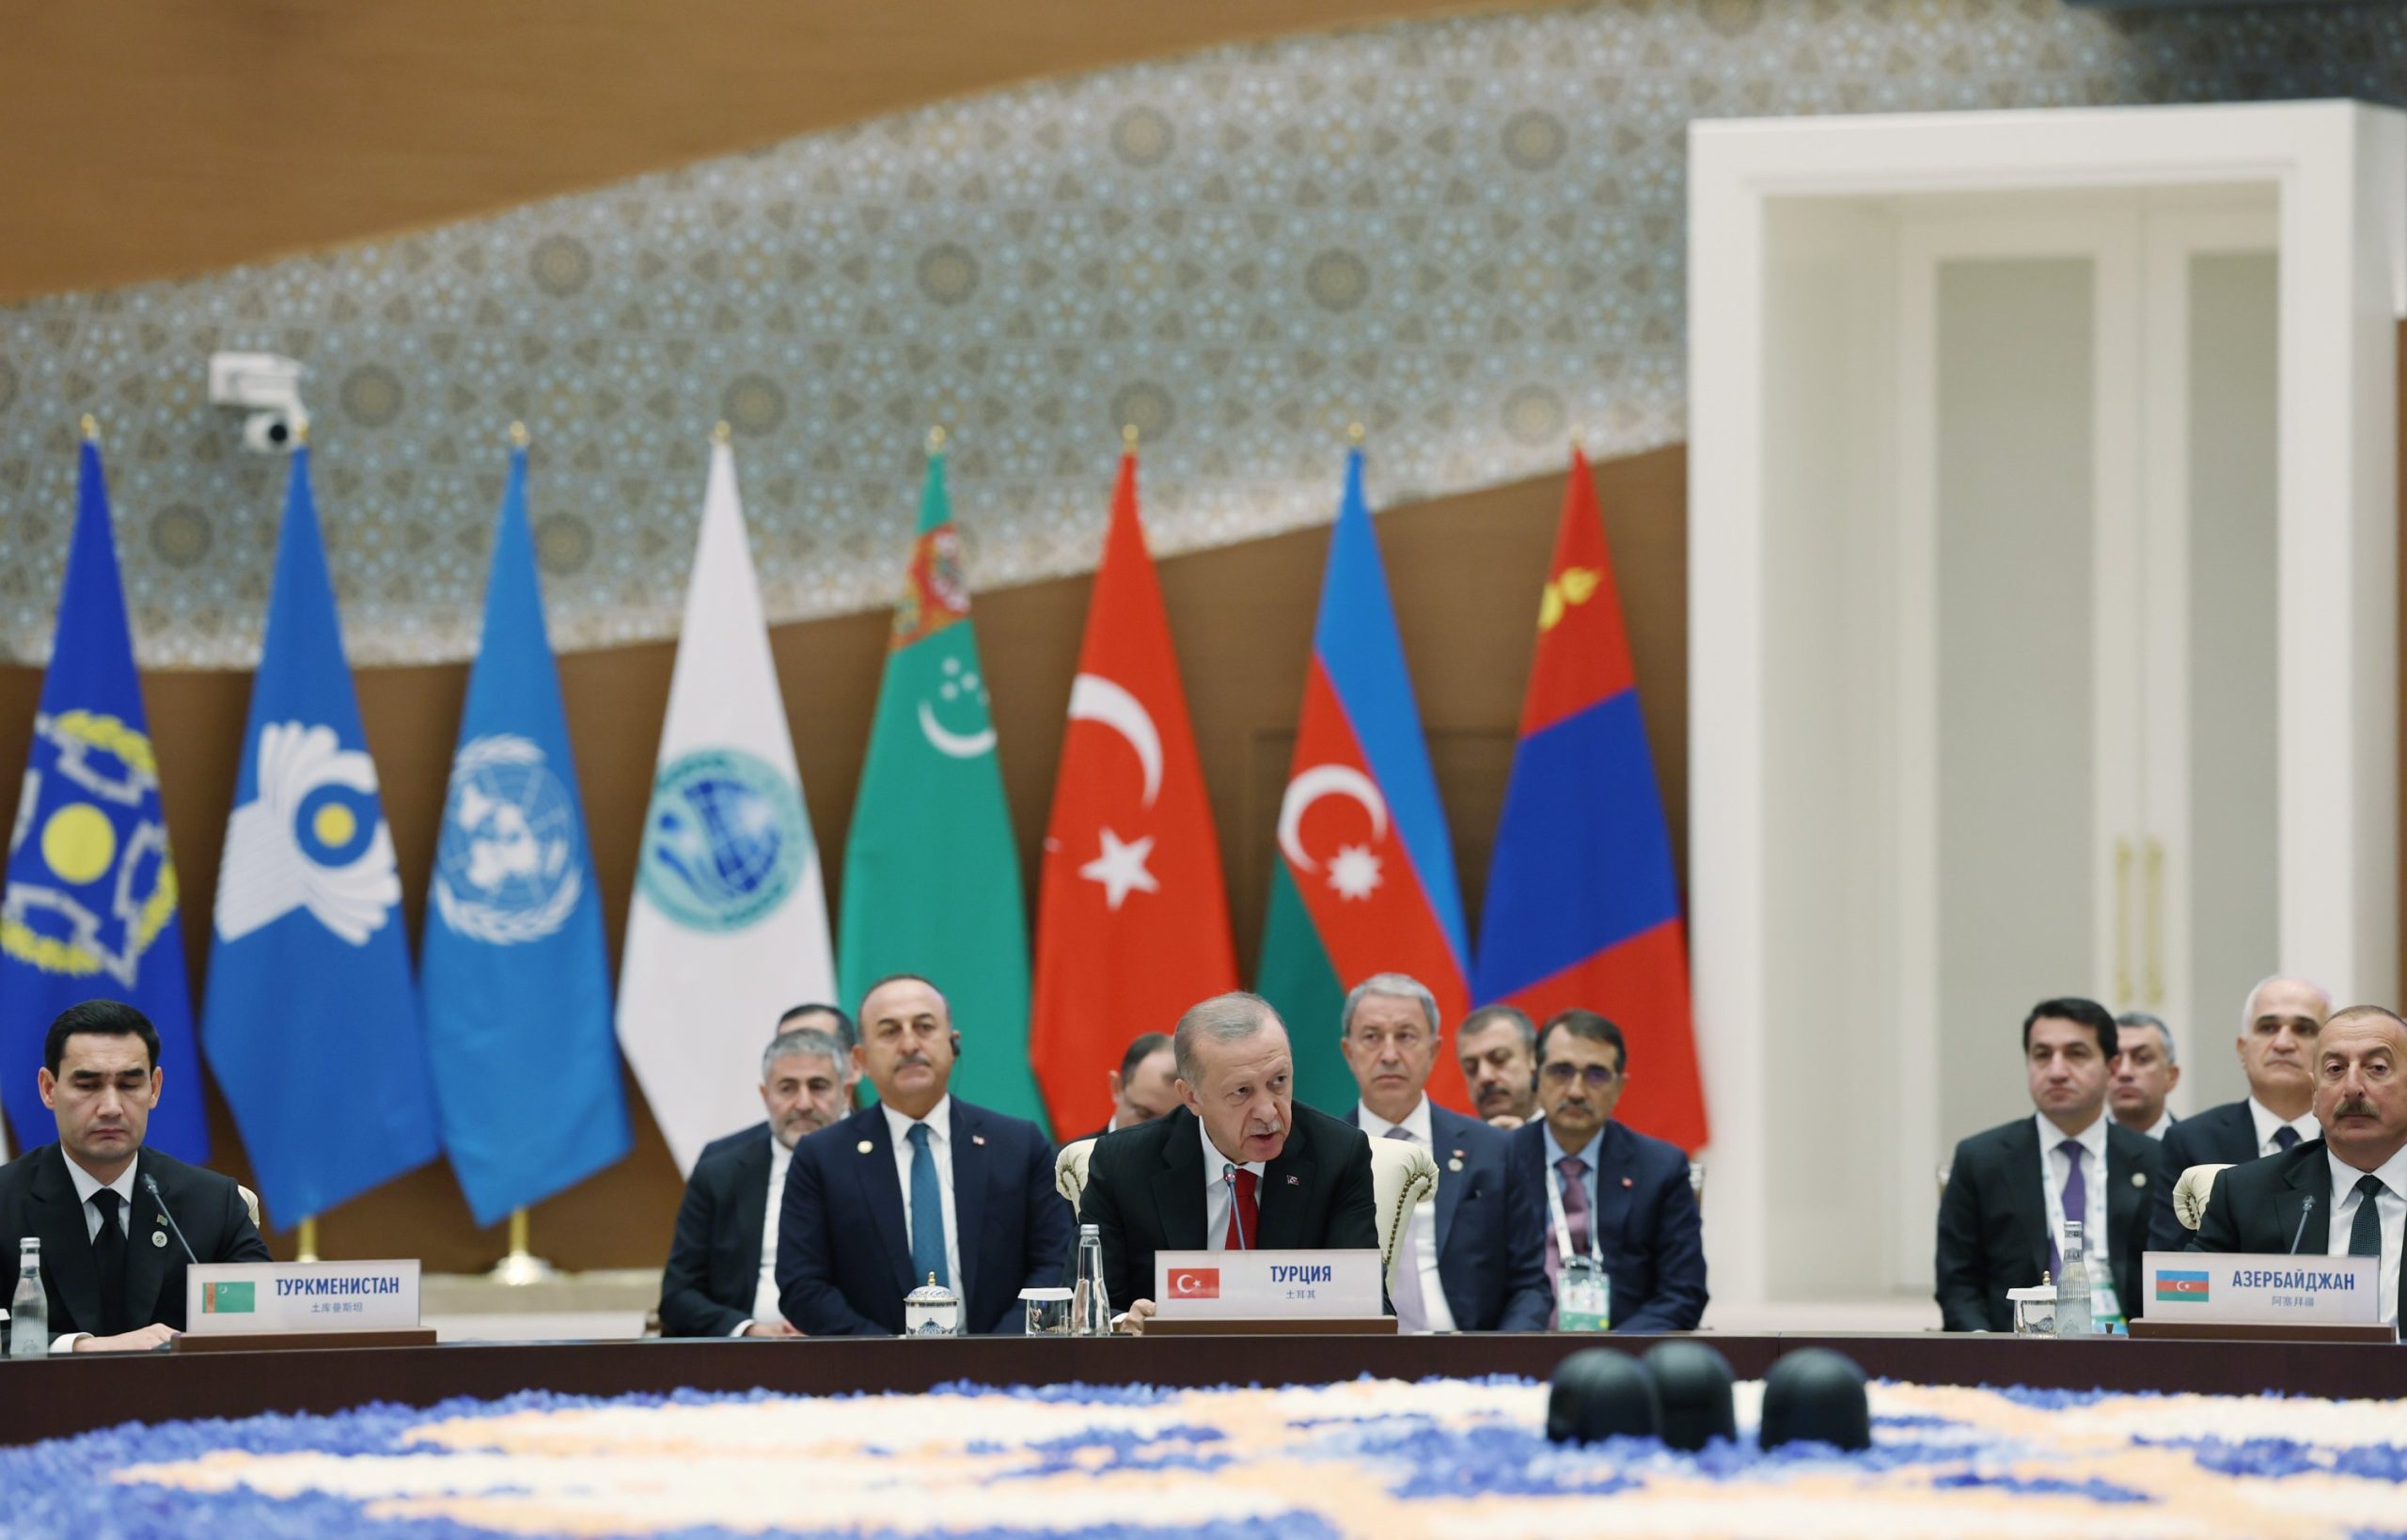 Turkey's Erdogan targets joining Shanghai Cooperation Organisation, media reports say 113